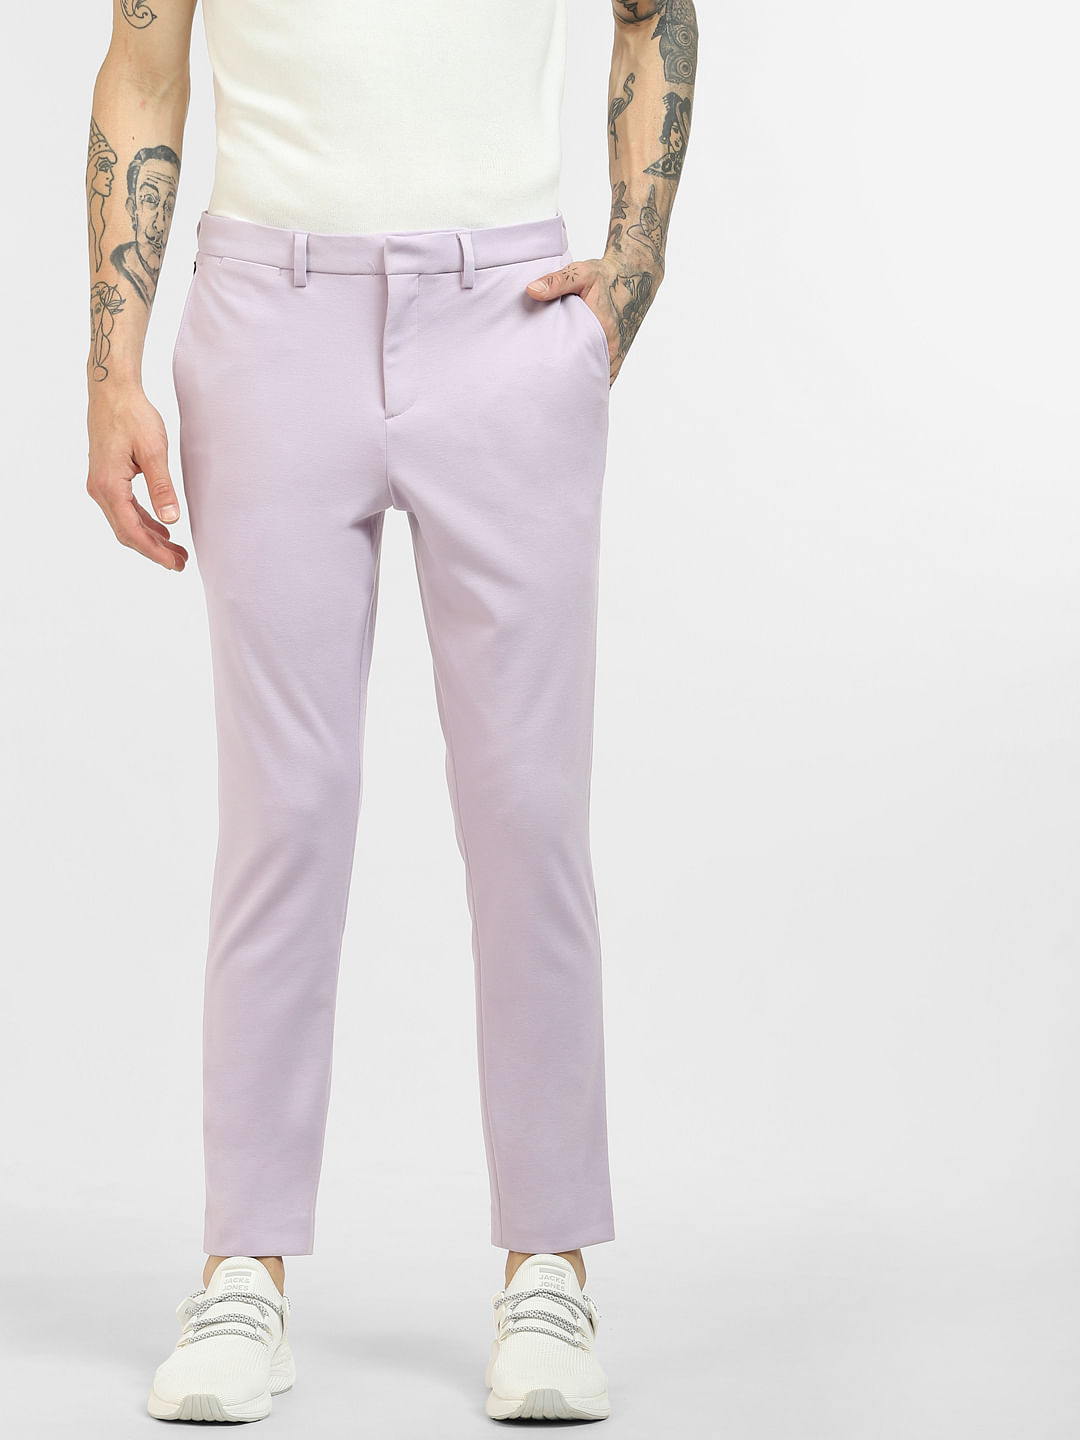 Jack  Jones Casual Trousers  Buy Jack  Jones Navy Blue Mid Rise Striped  Pants 28 OnlineNykaa fashion